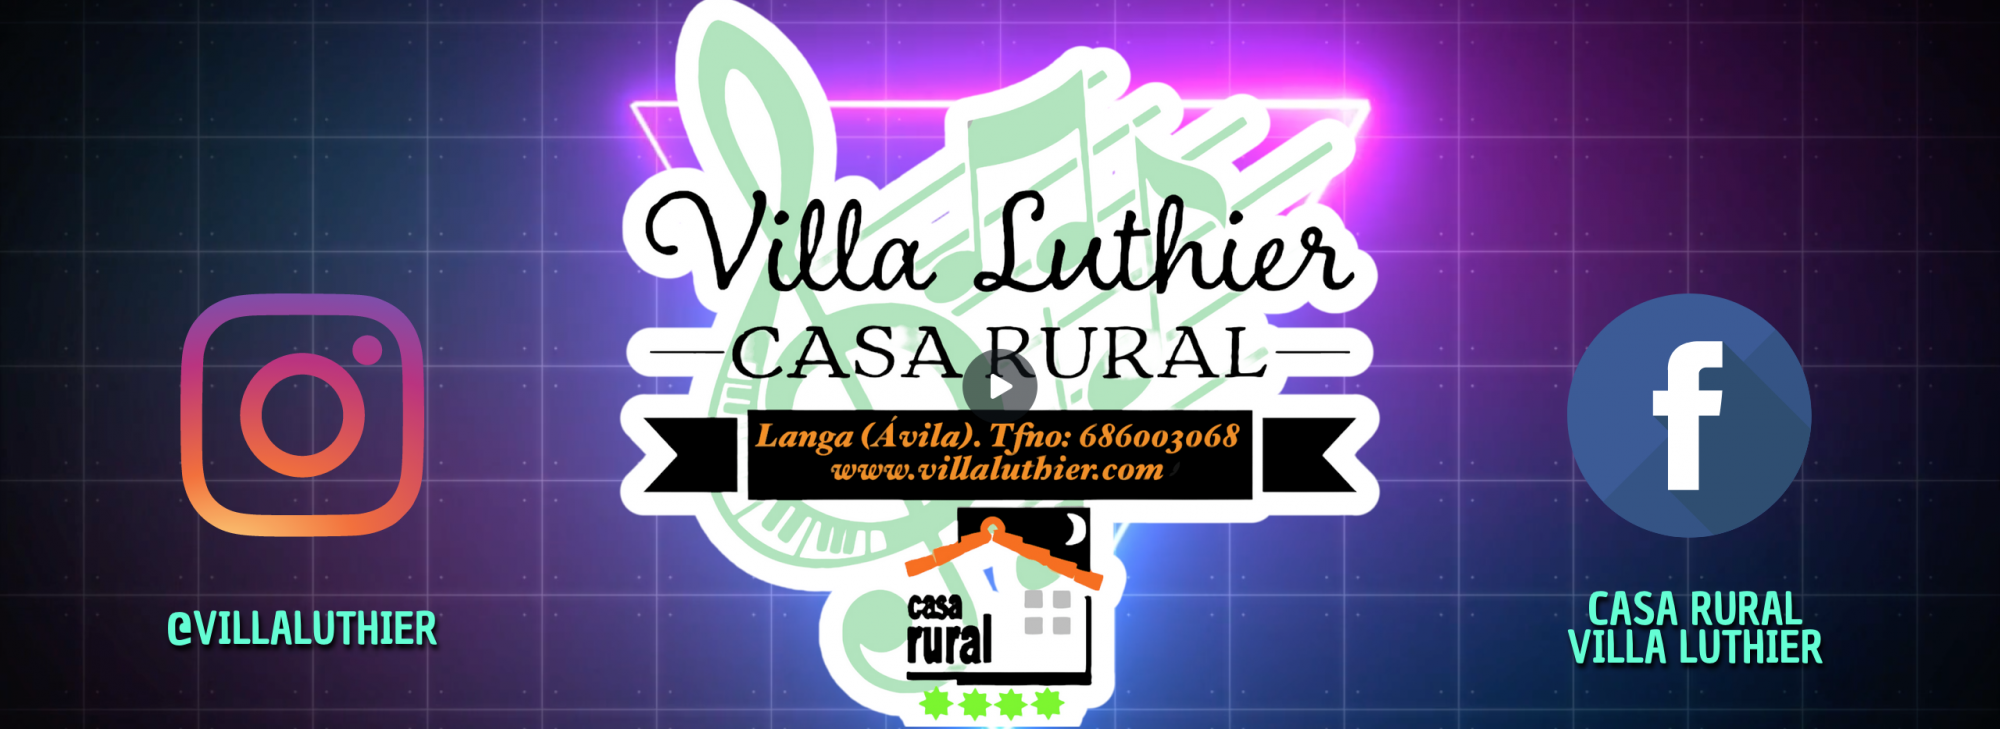 Casa rural & eventos "Villa Luthier"